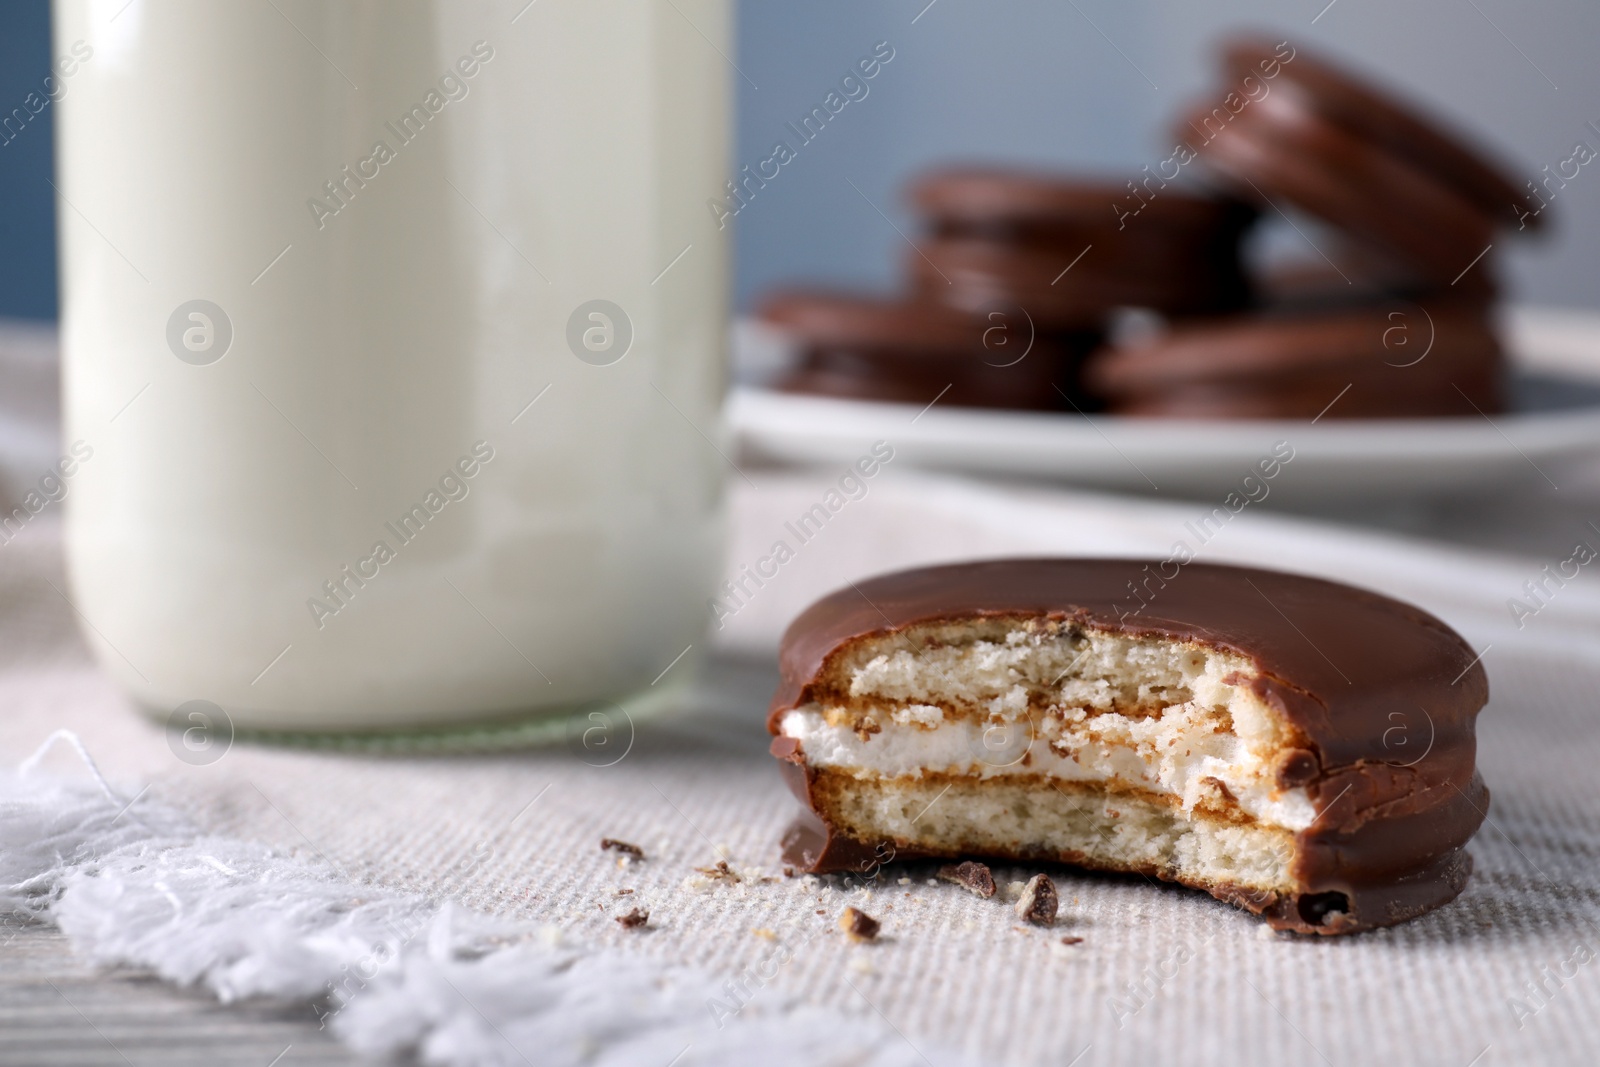 Photo of Tasty choco pie and milk on white napkin, closeup view